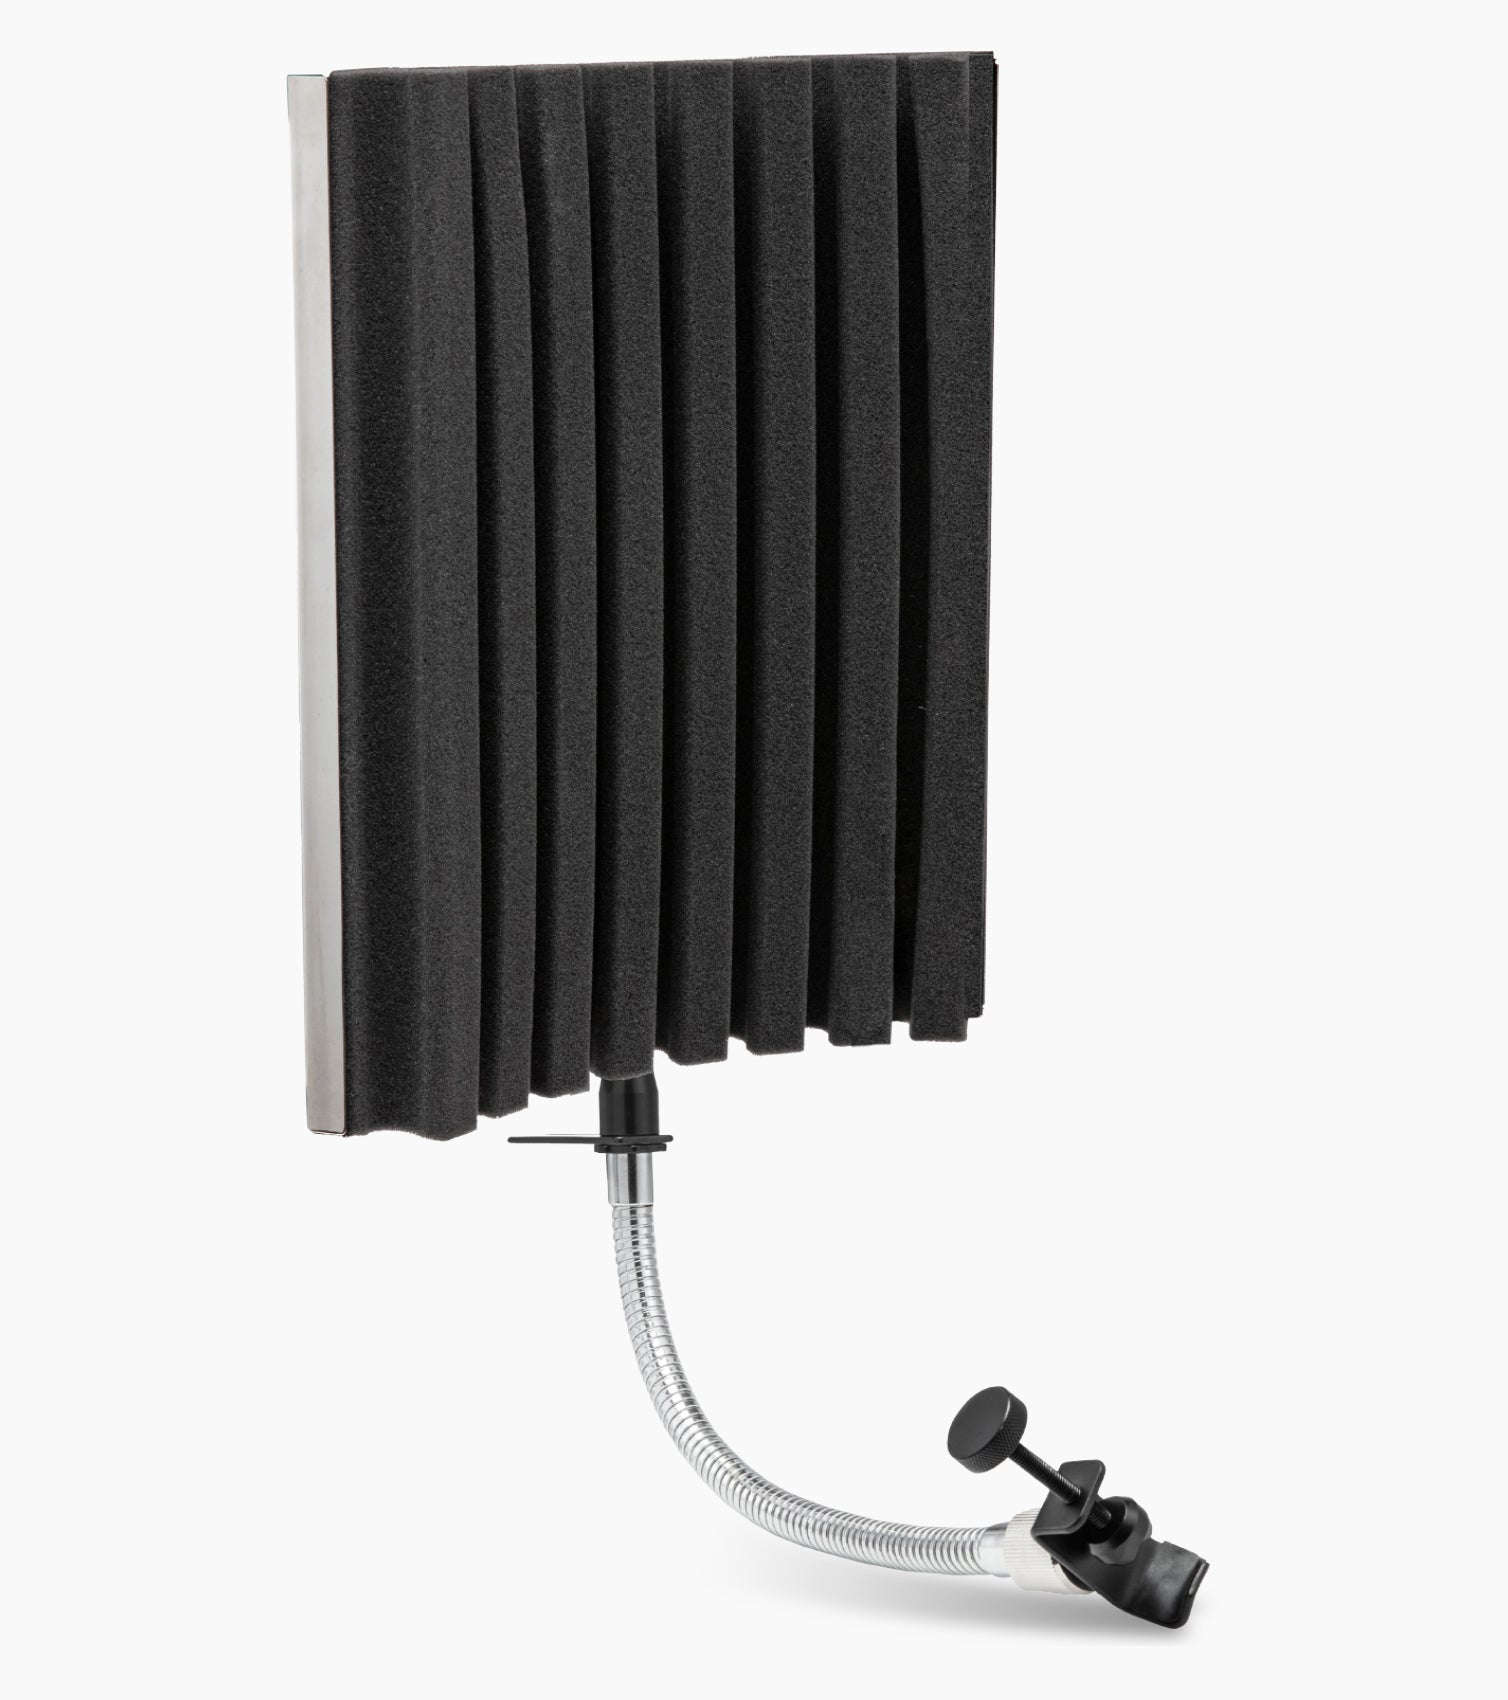 VRI-40 sound-absorbing vocal shield with gooseneck arm 